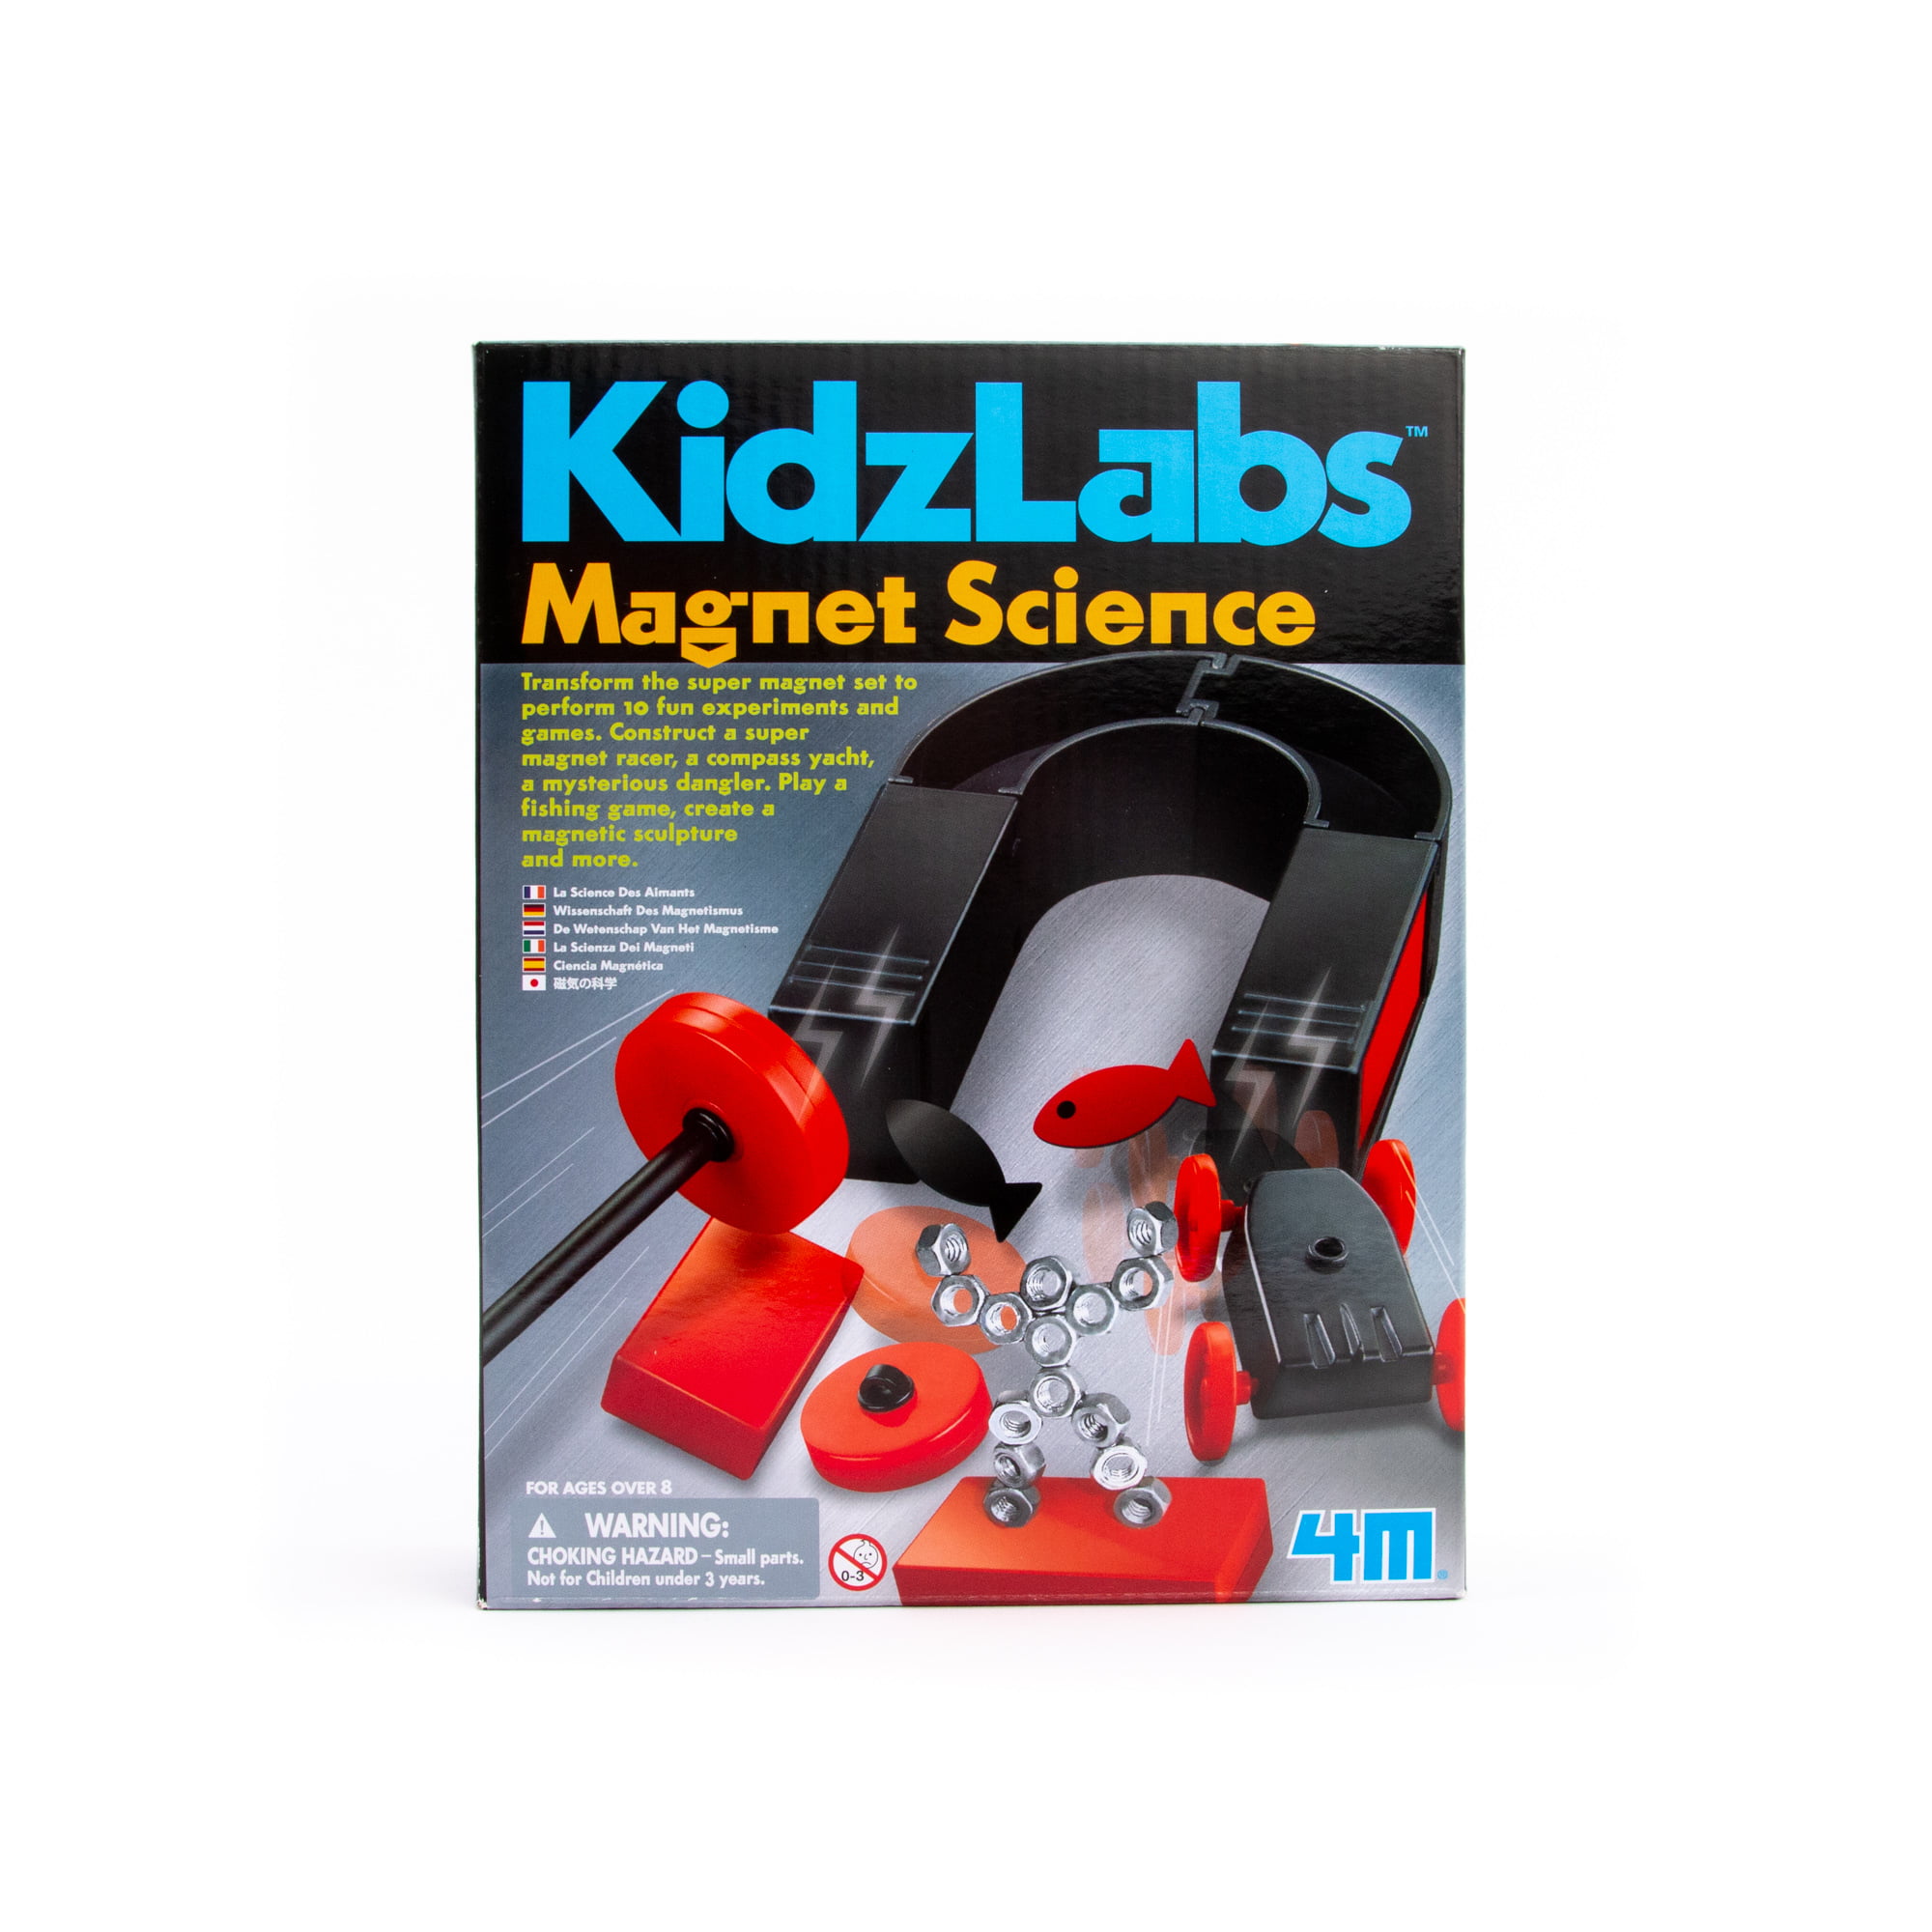 Magnet Science Kidz Labs Boys Girls Children Kids Build Your Own Set Latest Birthday Gift Present Fun Games & Toys Idea Age 8+